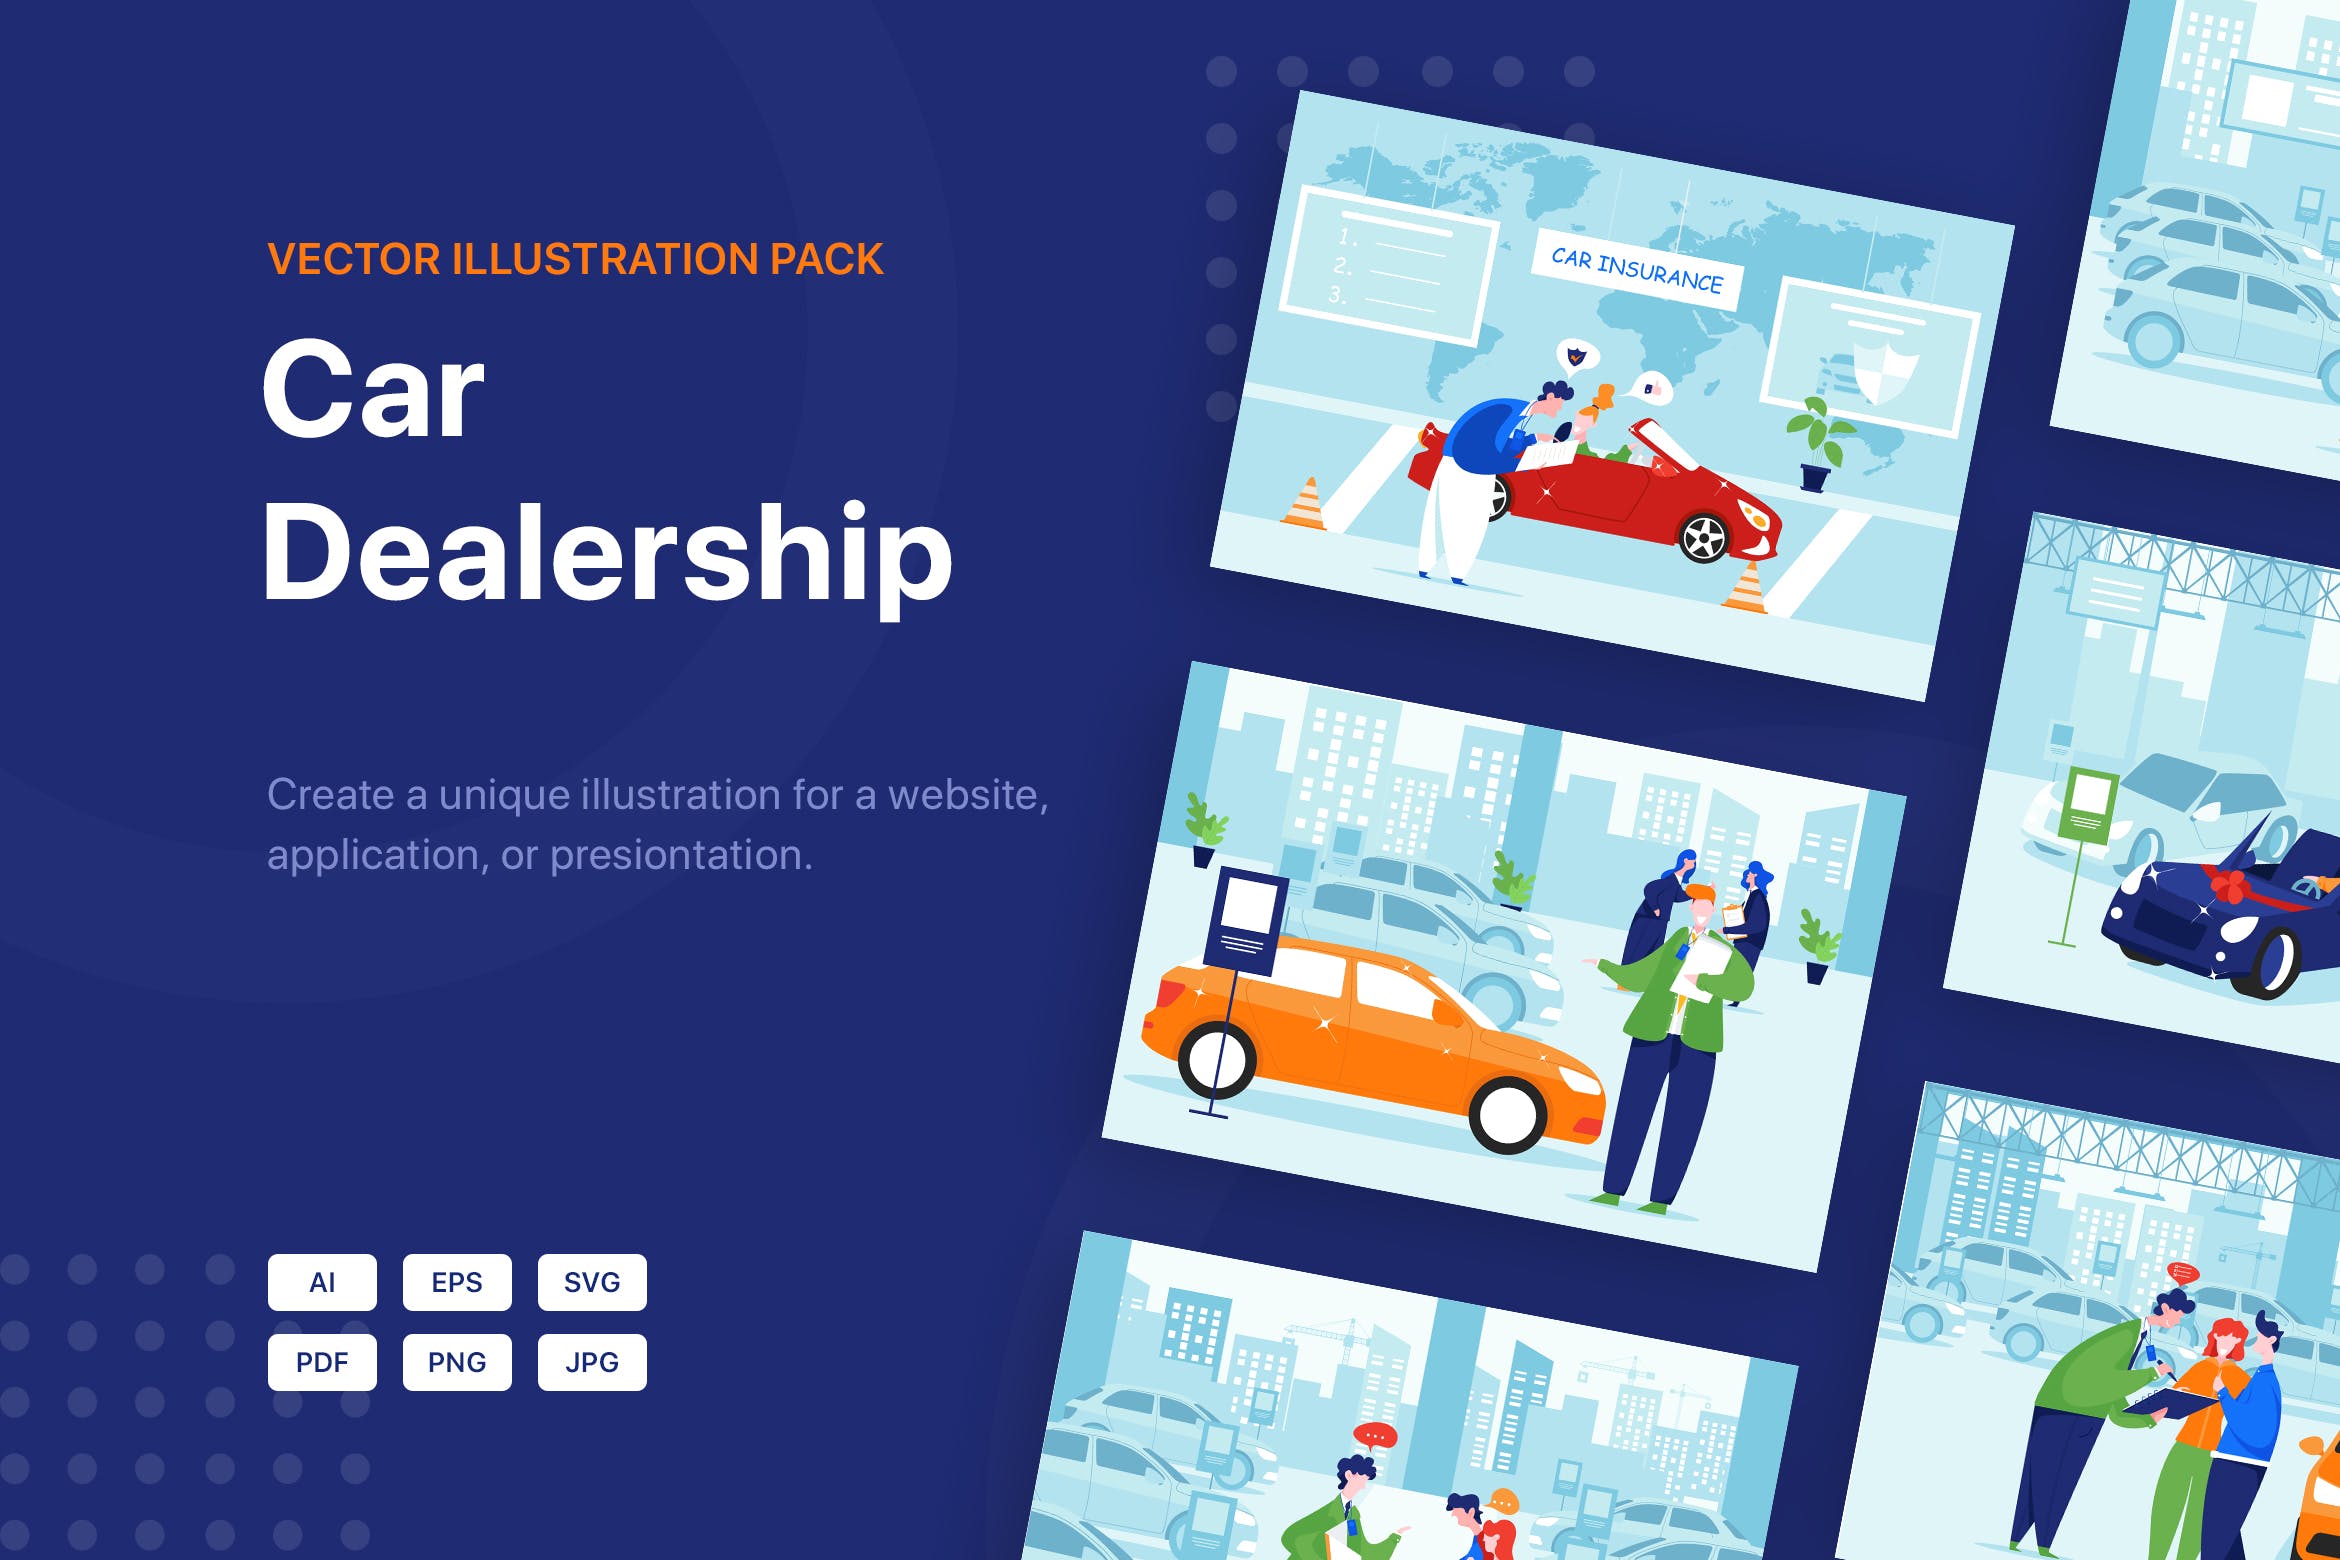 汽车经销商主题矢量插画素材包 Car Dealership Vector Illustration Pack插图